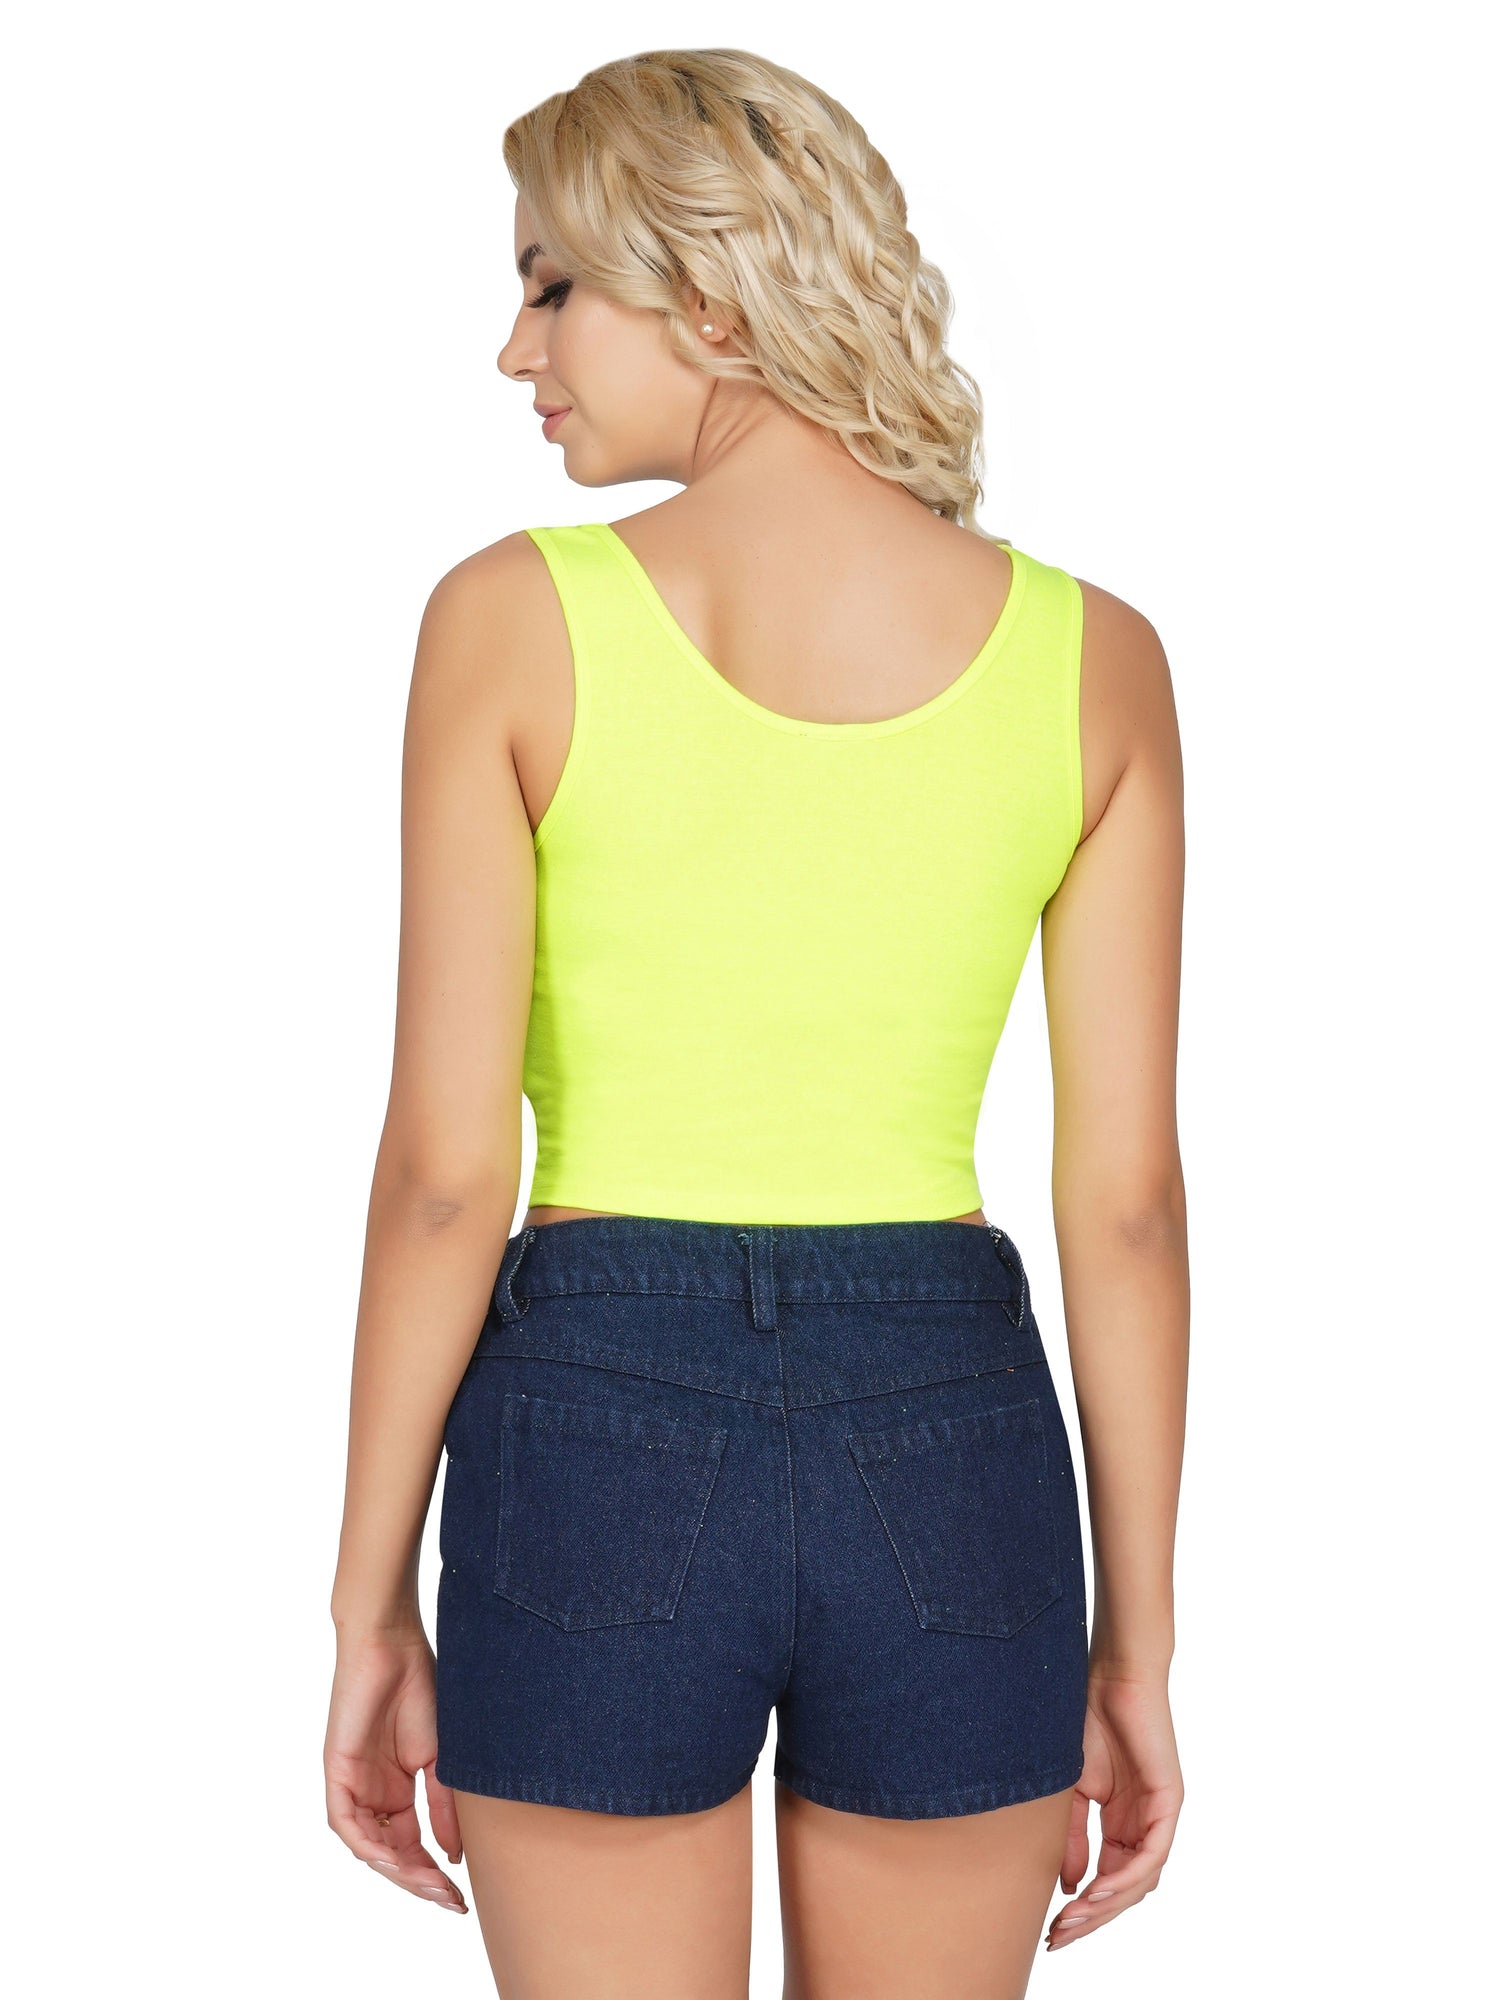 SLAY. Women's Neon Green Printed Crop Top-clothing-to-slay.myshopify.com-Crop Top